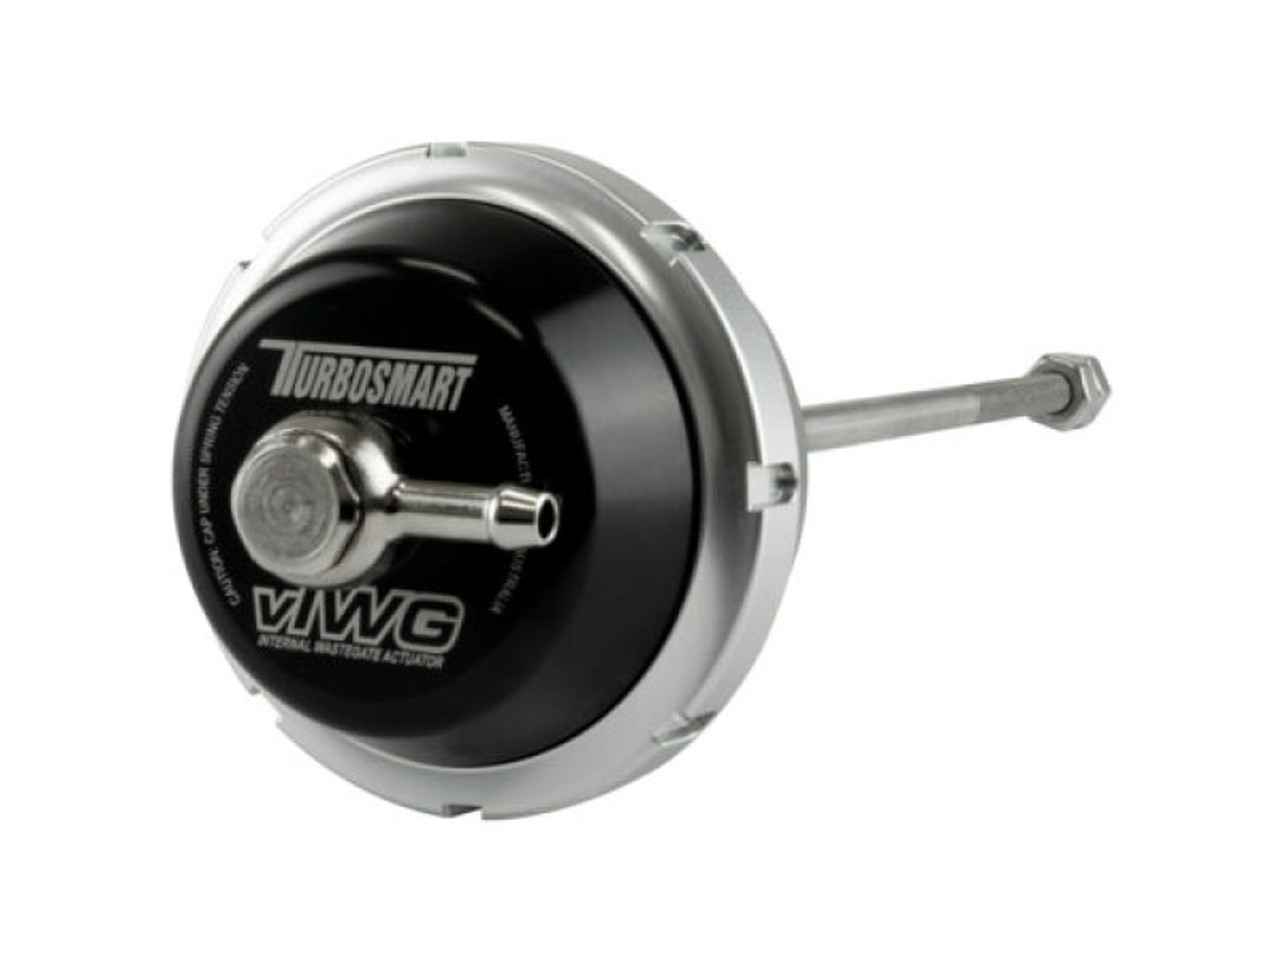 Turbosmart Universal 57mm vIWG Wastegate Actuator - 6inHg -150mm - TS-0604-2065 User 1